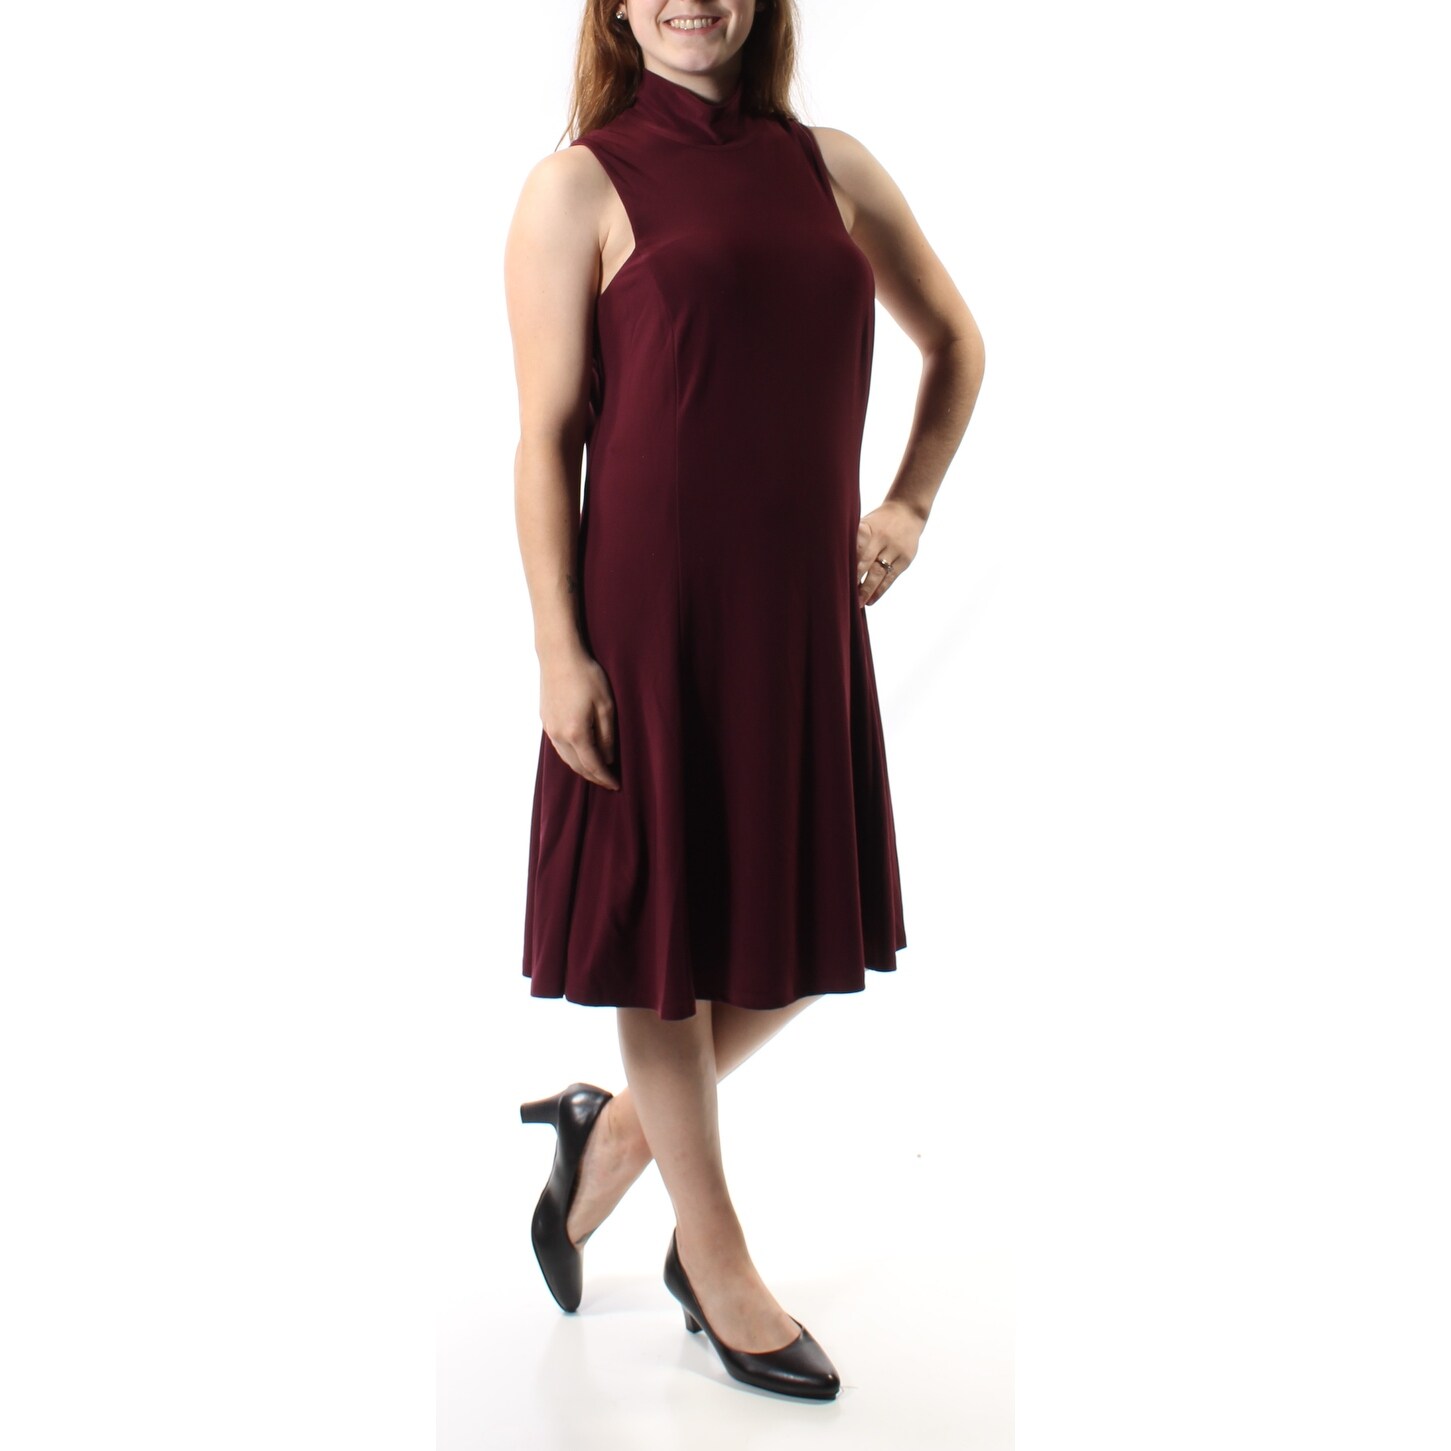 burgundy knee length dress